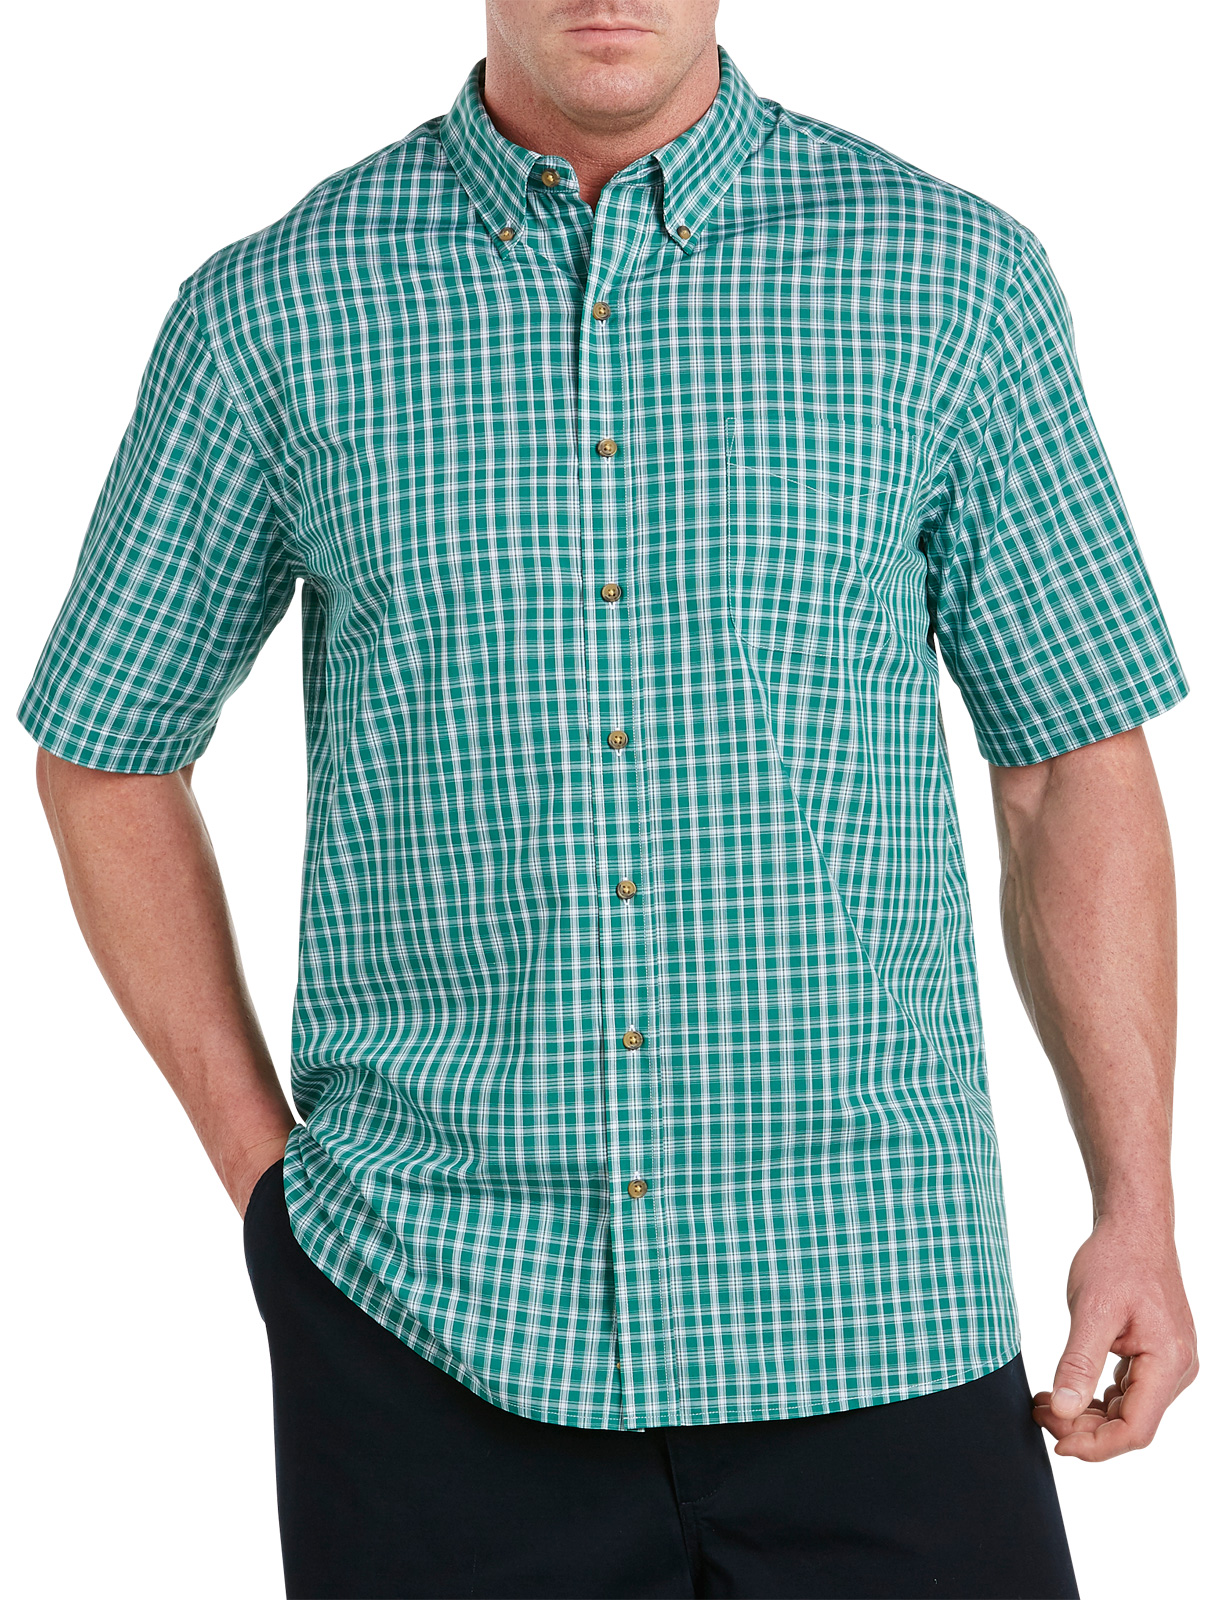 Harbor Bay Men's Big and Tall Easy-Care Medium Plaid Sport Shirt